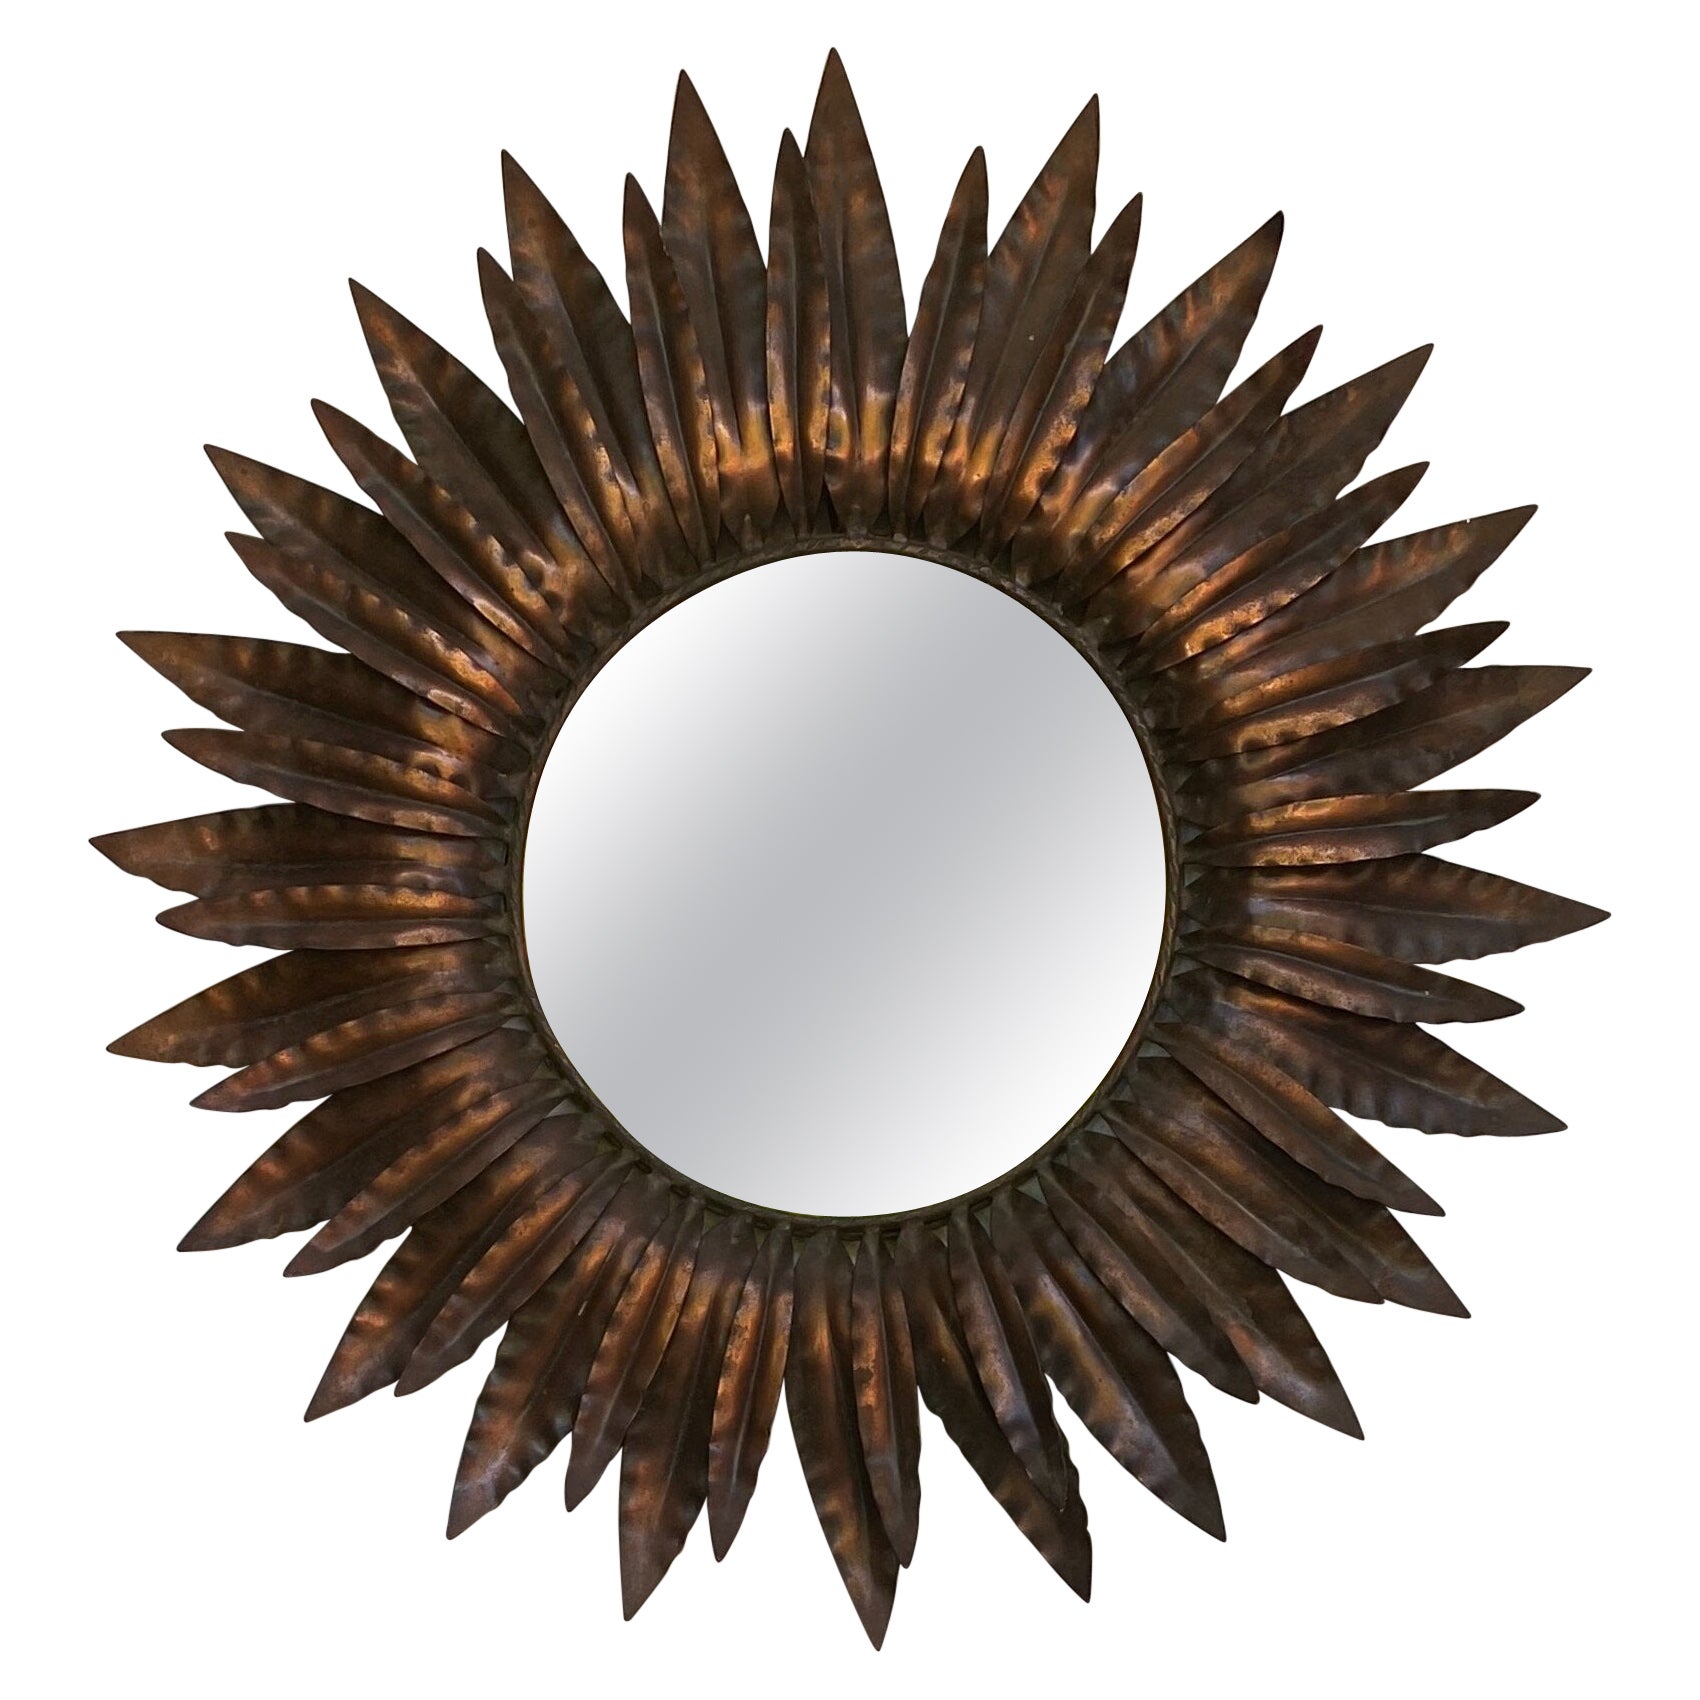 Spanish Sunburst Mirror with Antique Copper Finish For Sale